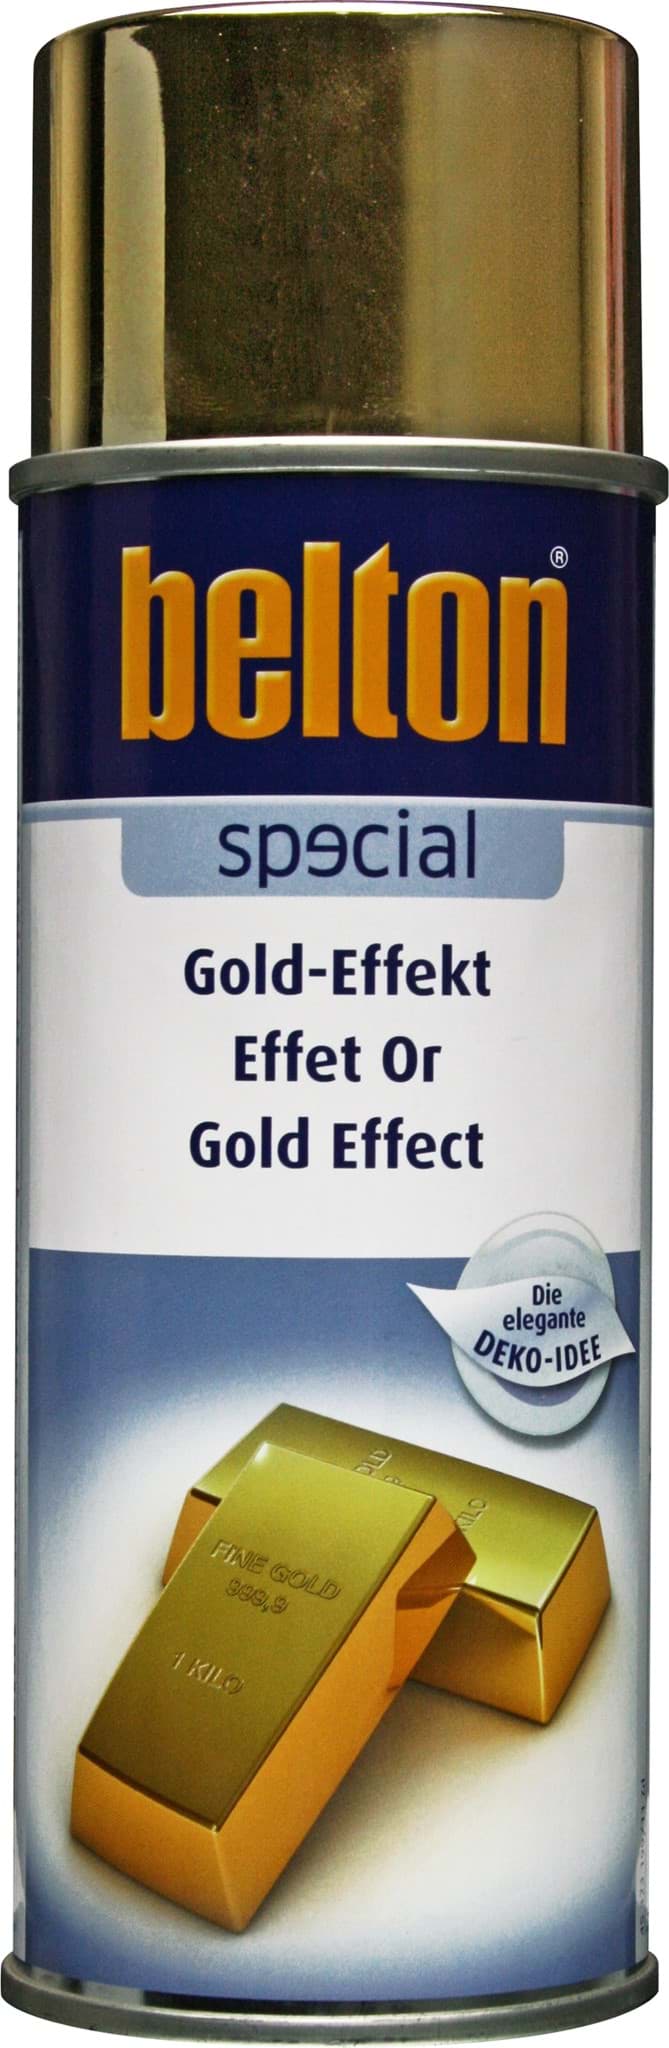 Belton special Gold Effekt Spray resmi